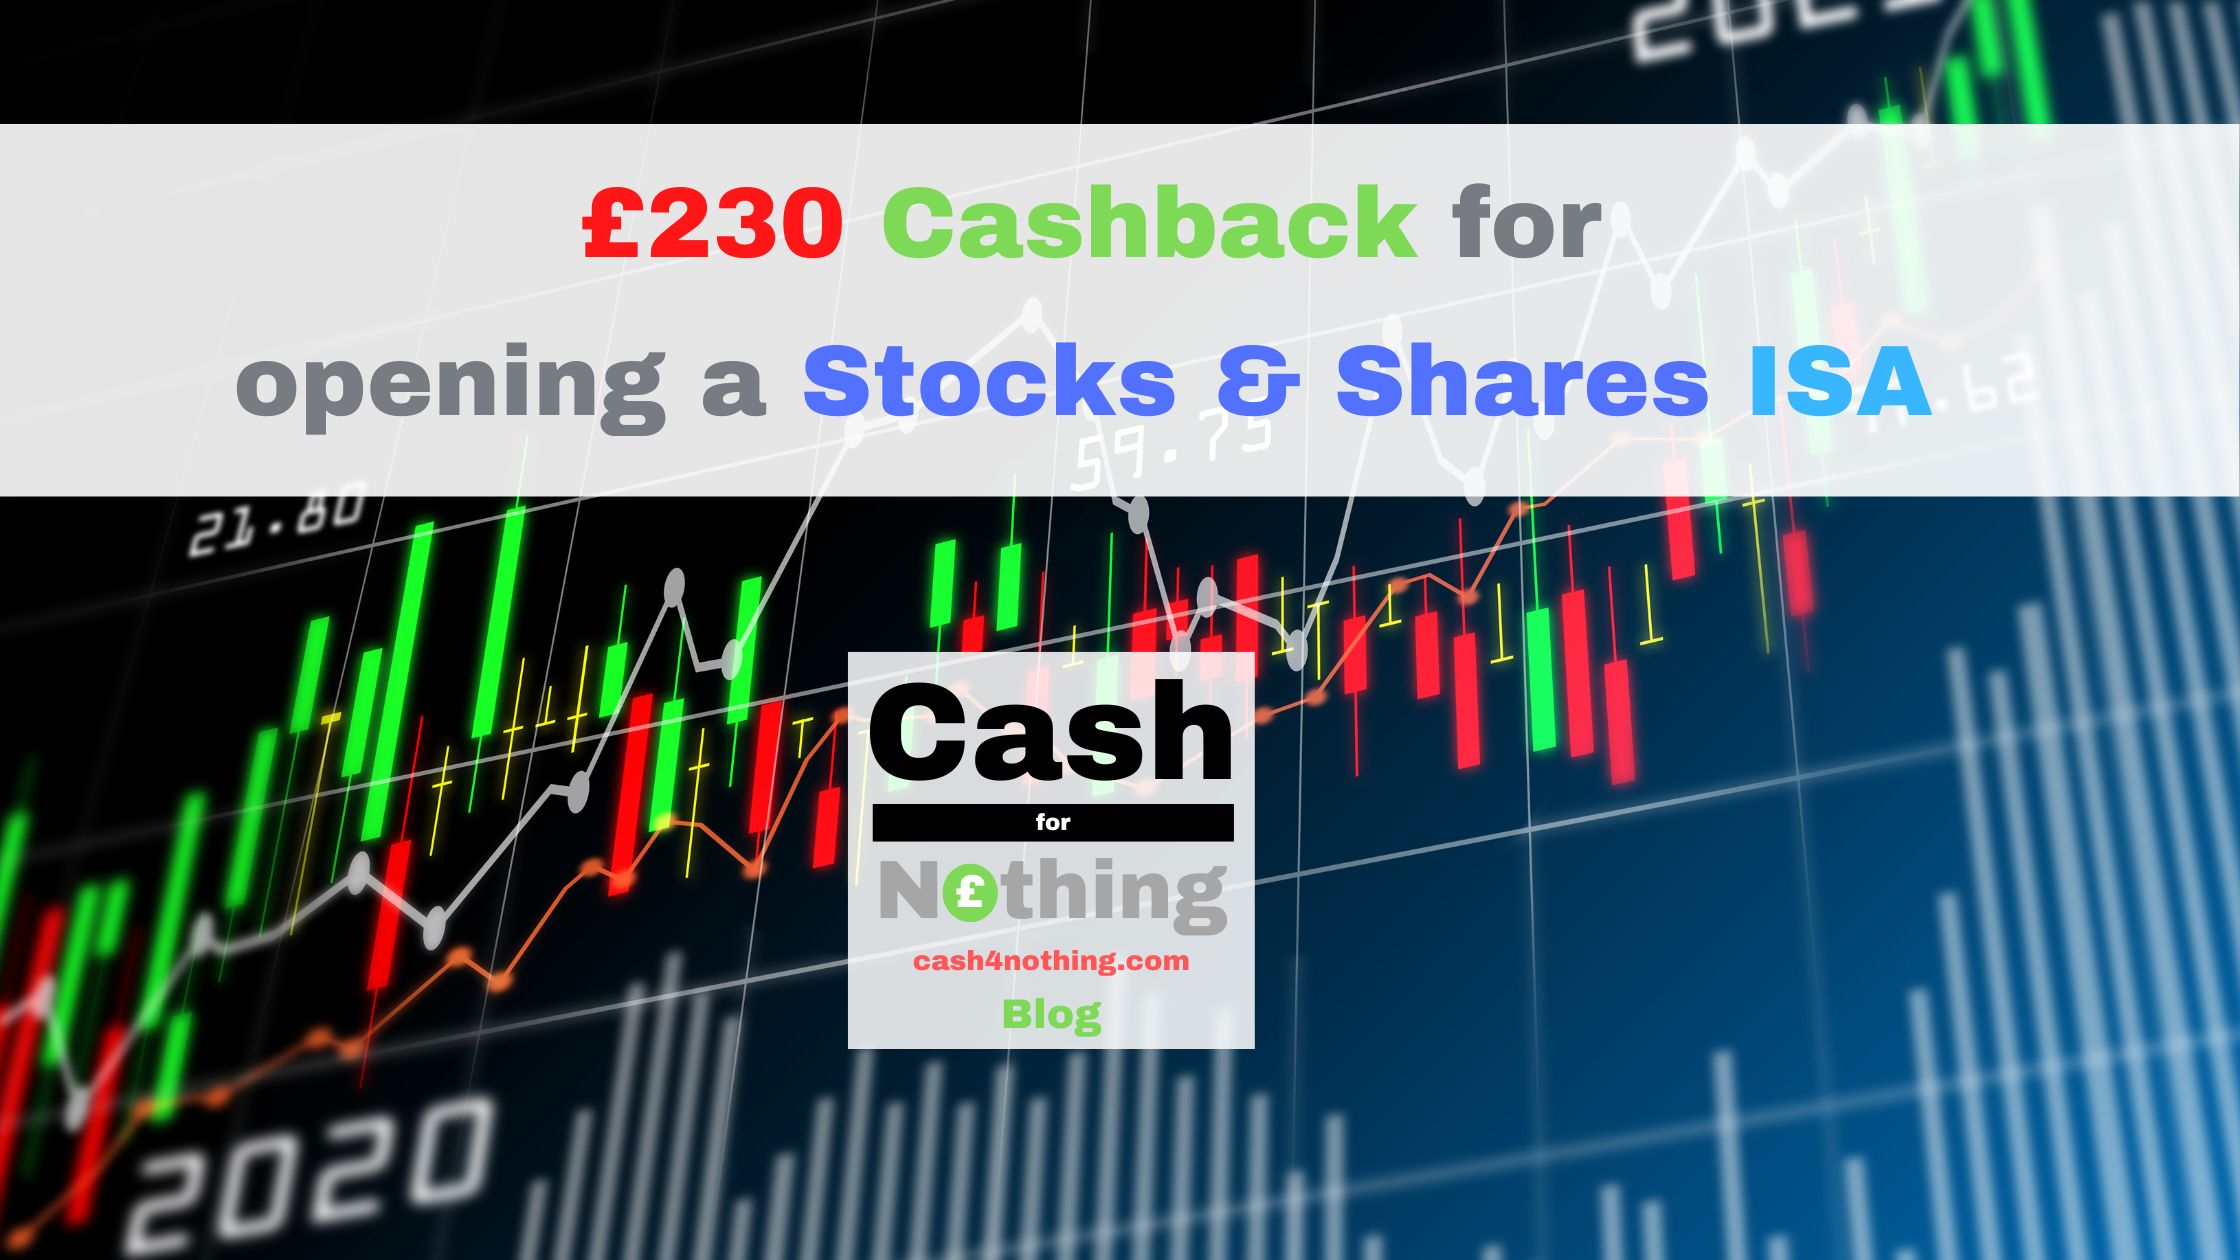 Cashback for opening Stocks & Shares ISA